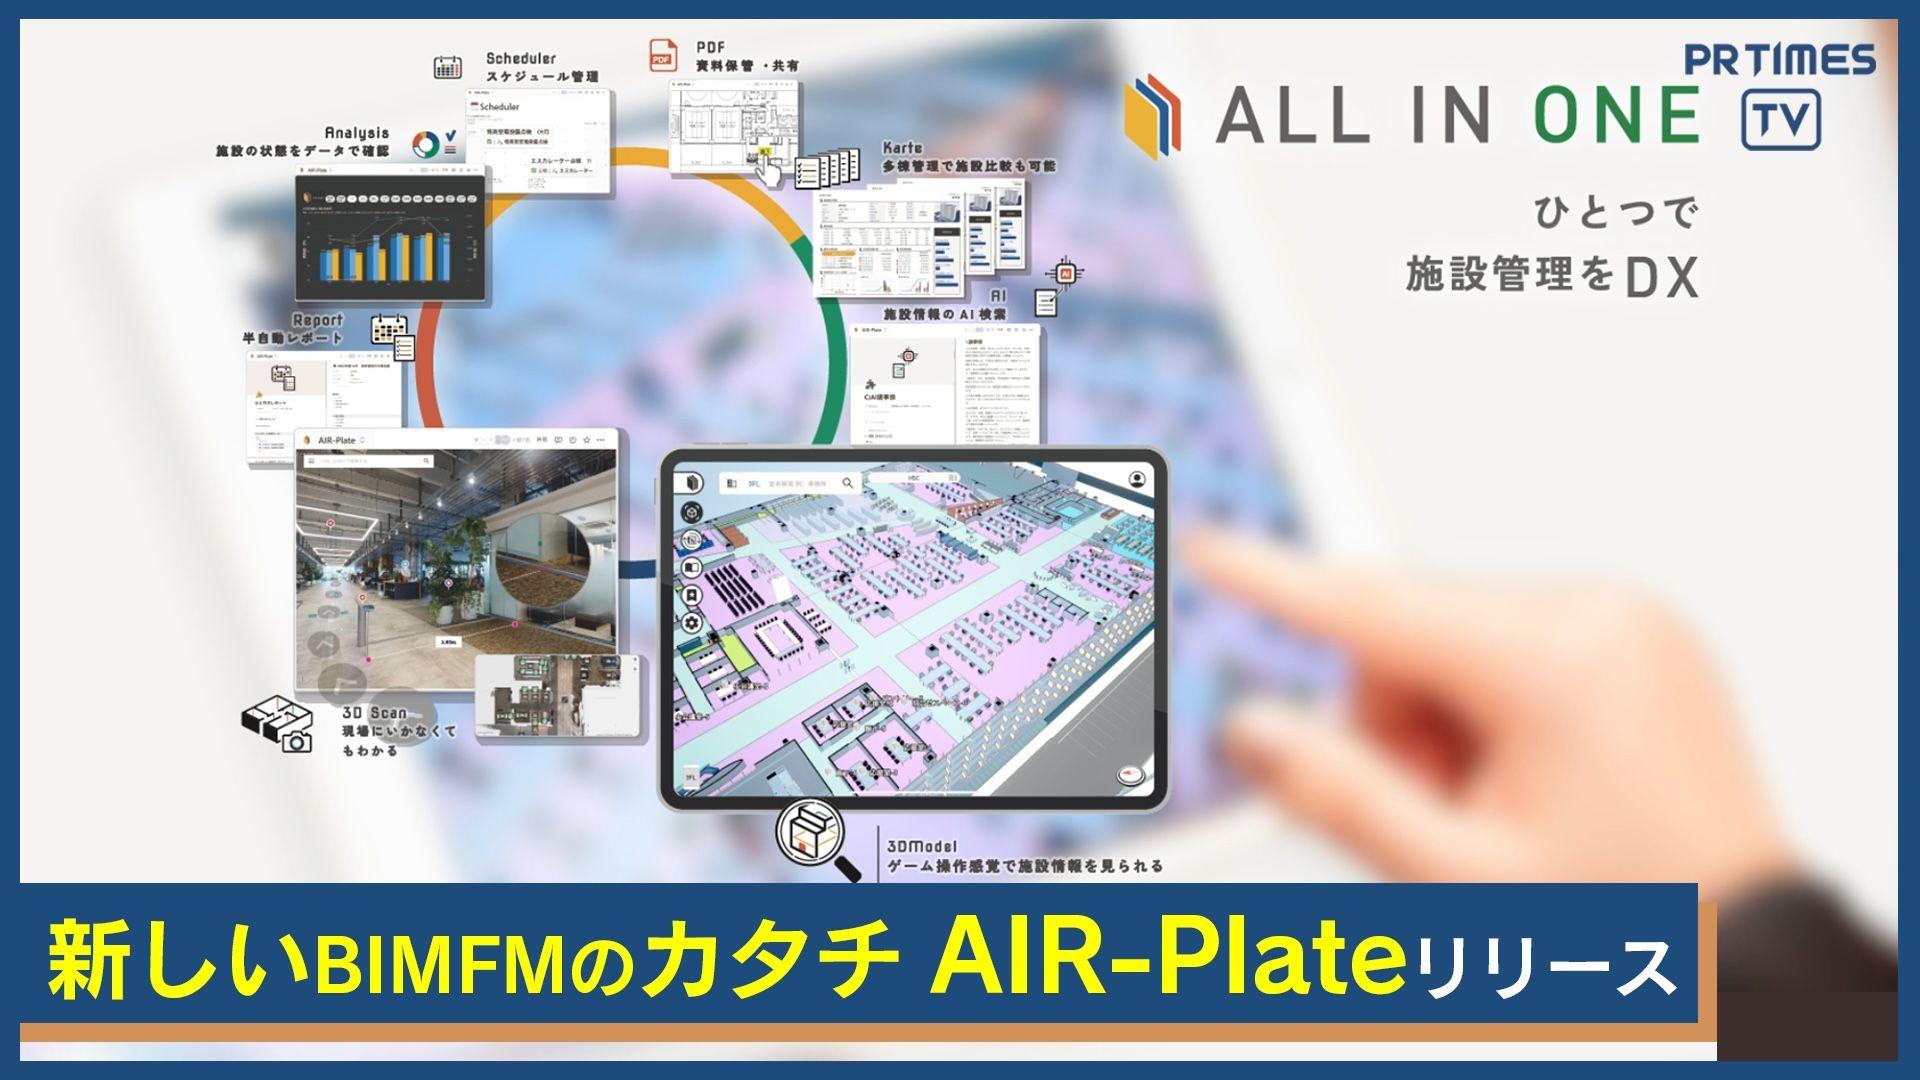 AIR-Plate™ ―複雑な施設情報を直感で操作、新しいBIM-FMのカタチ― 3/13リリース